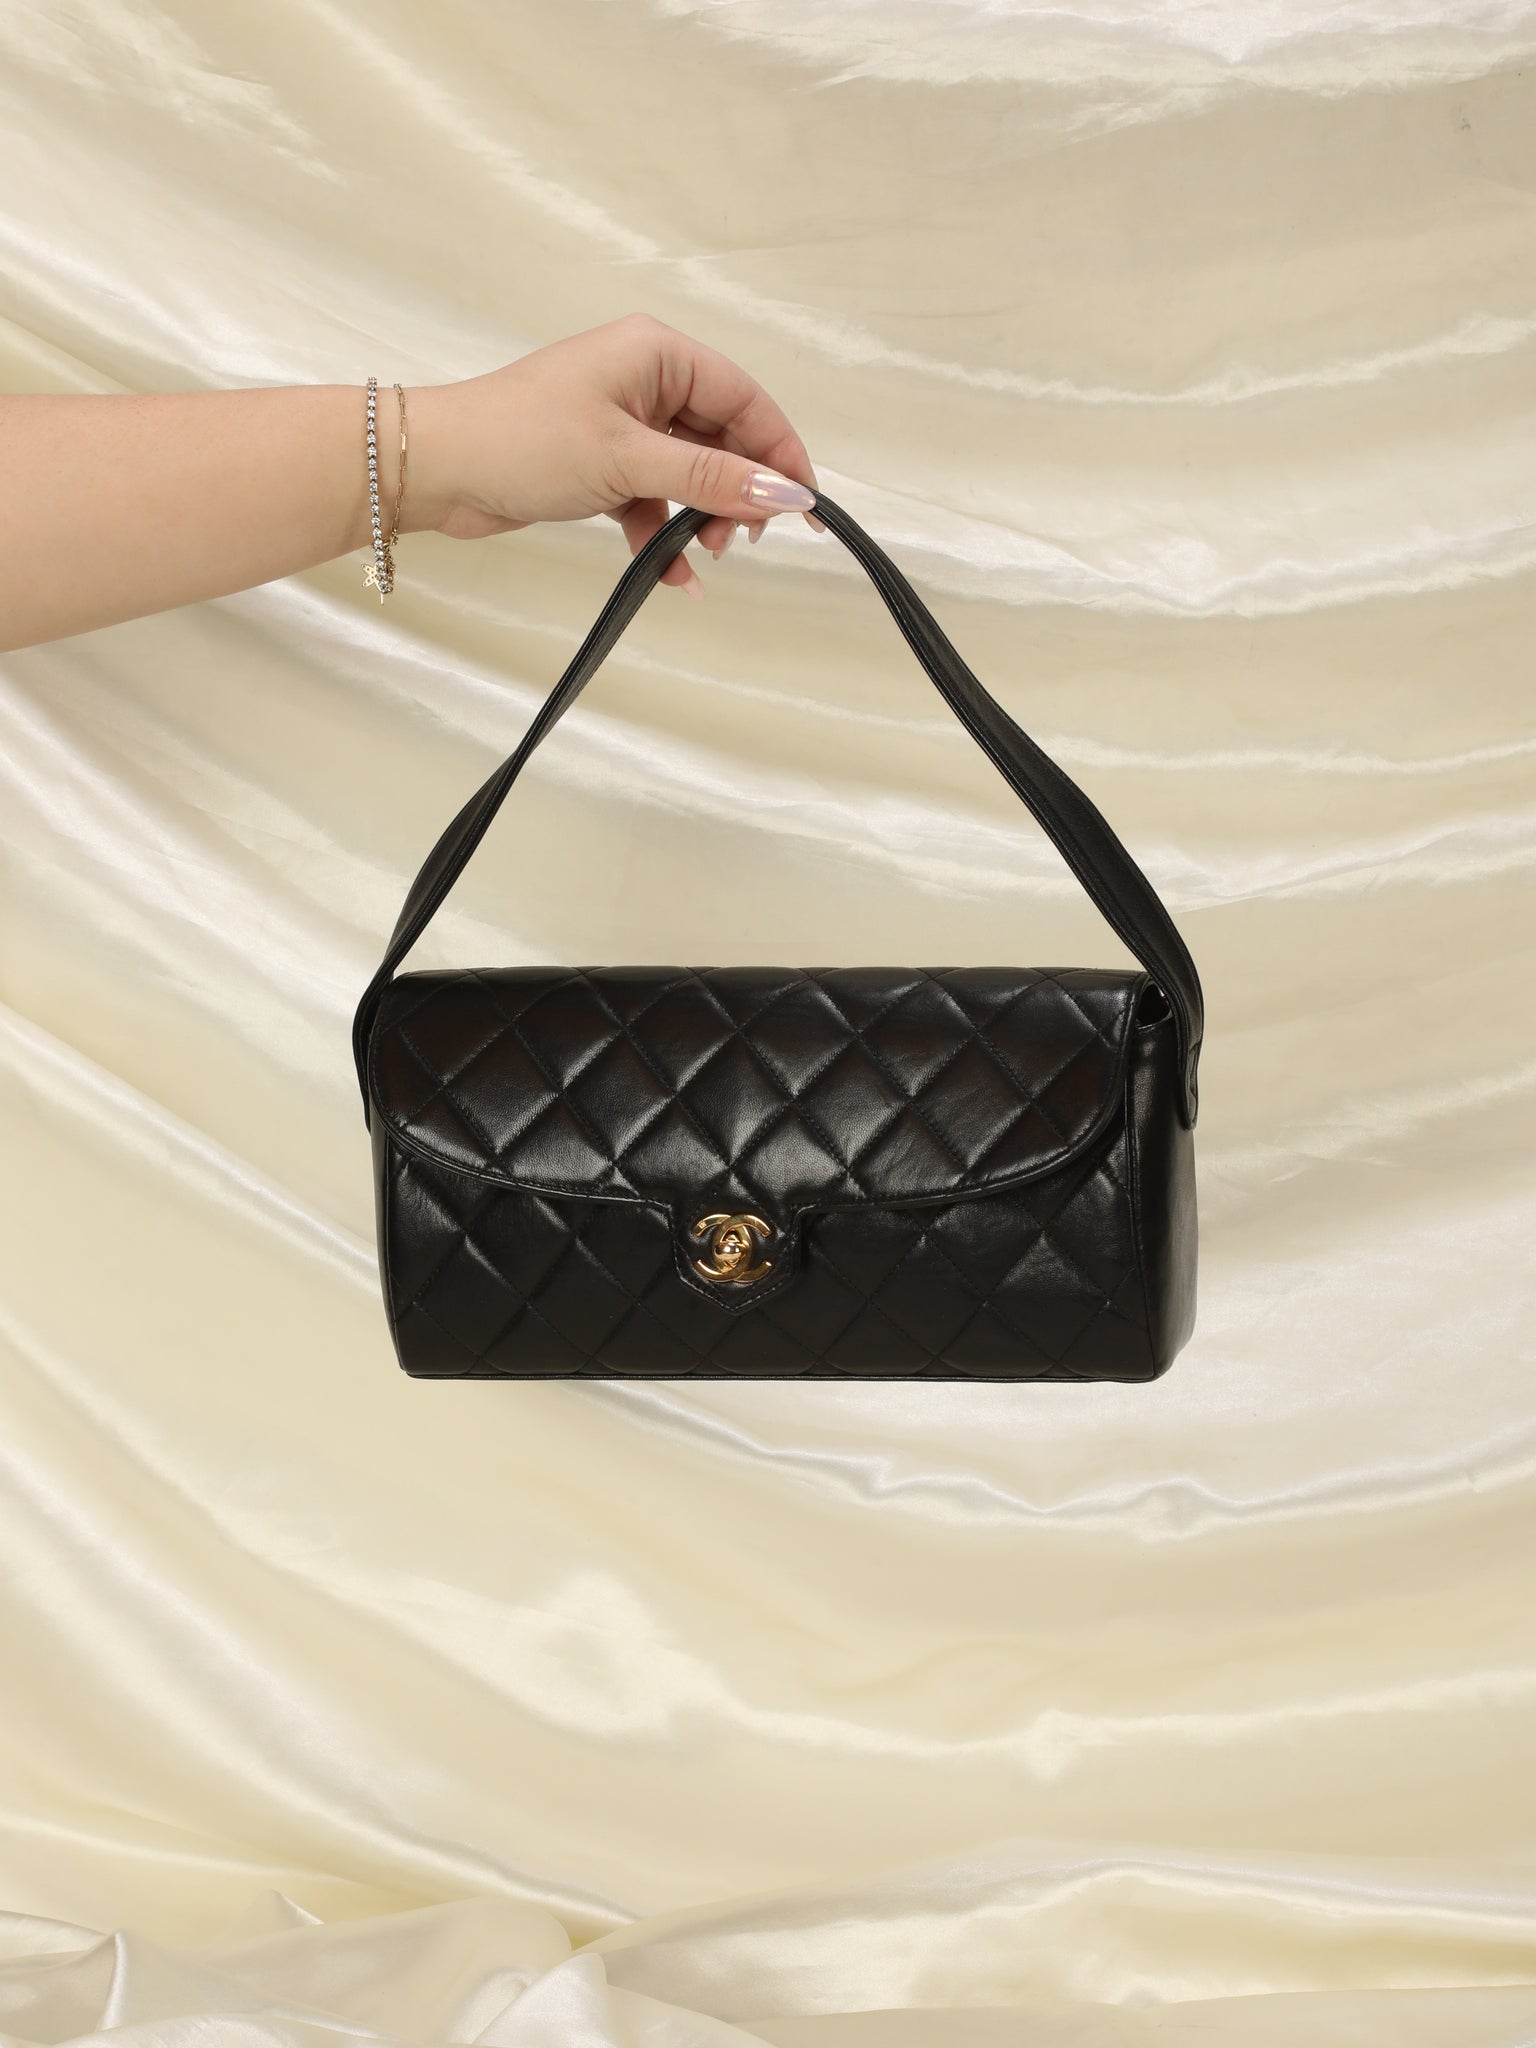 Authentic Chanel Vintage Envelope Flap Bag in Beige Lambskin w 24K